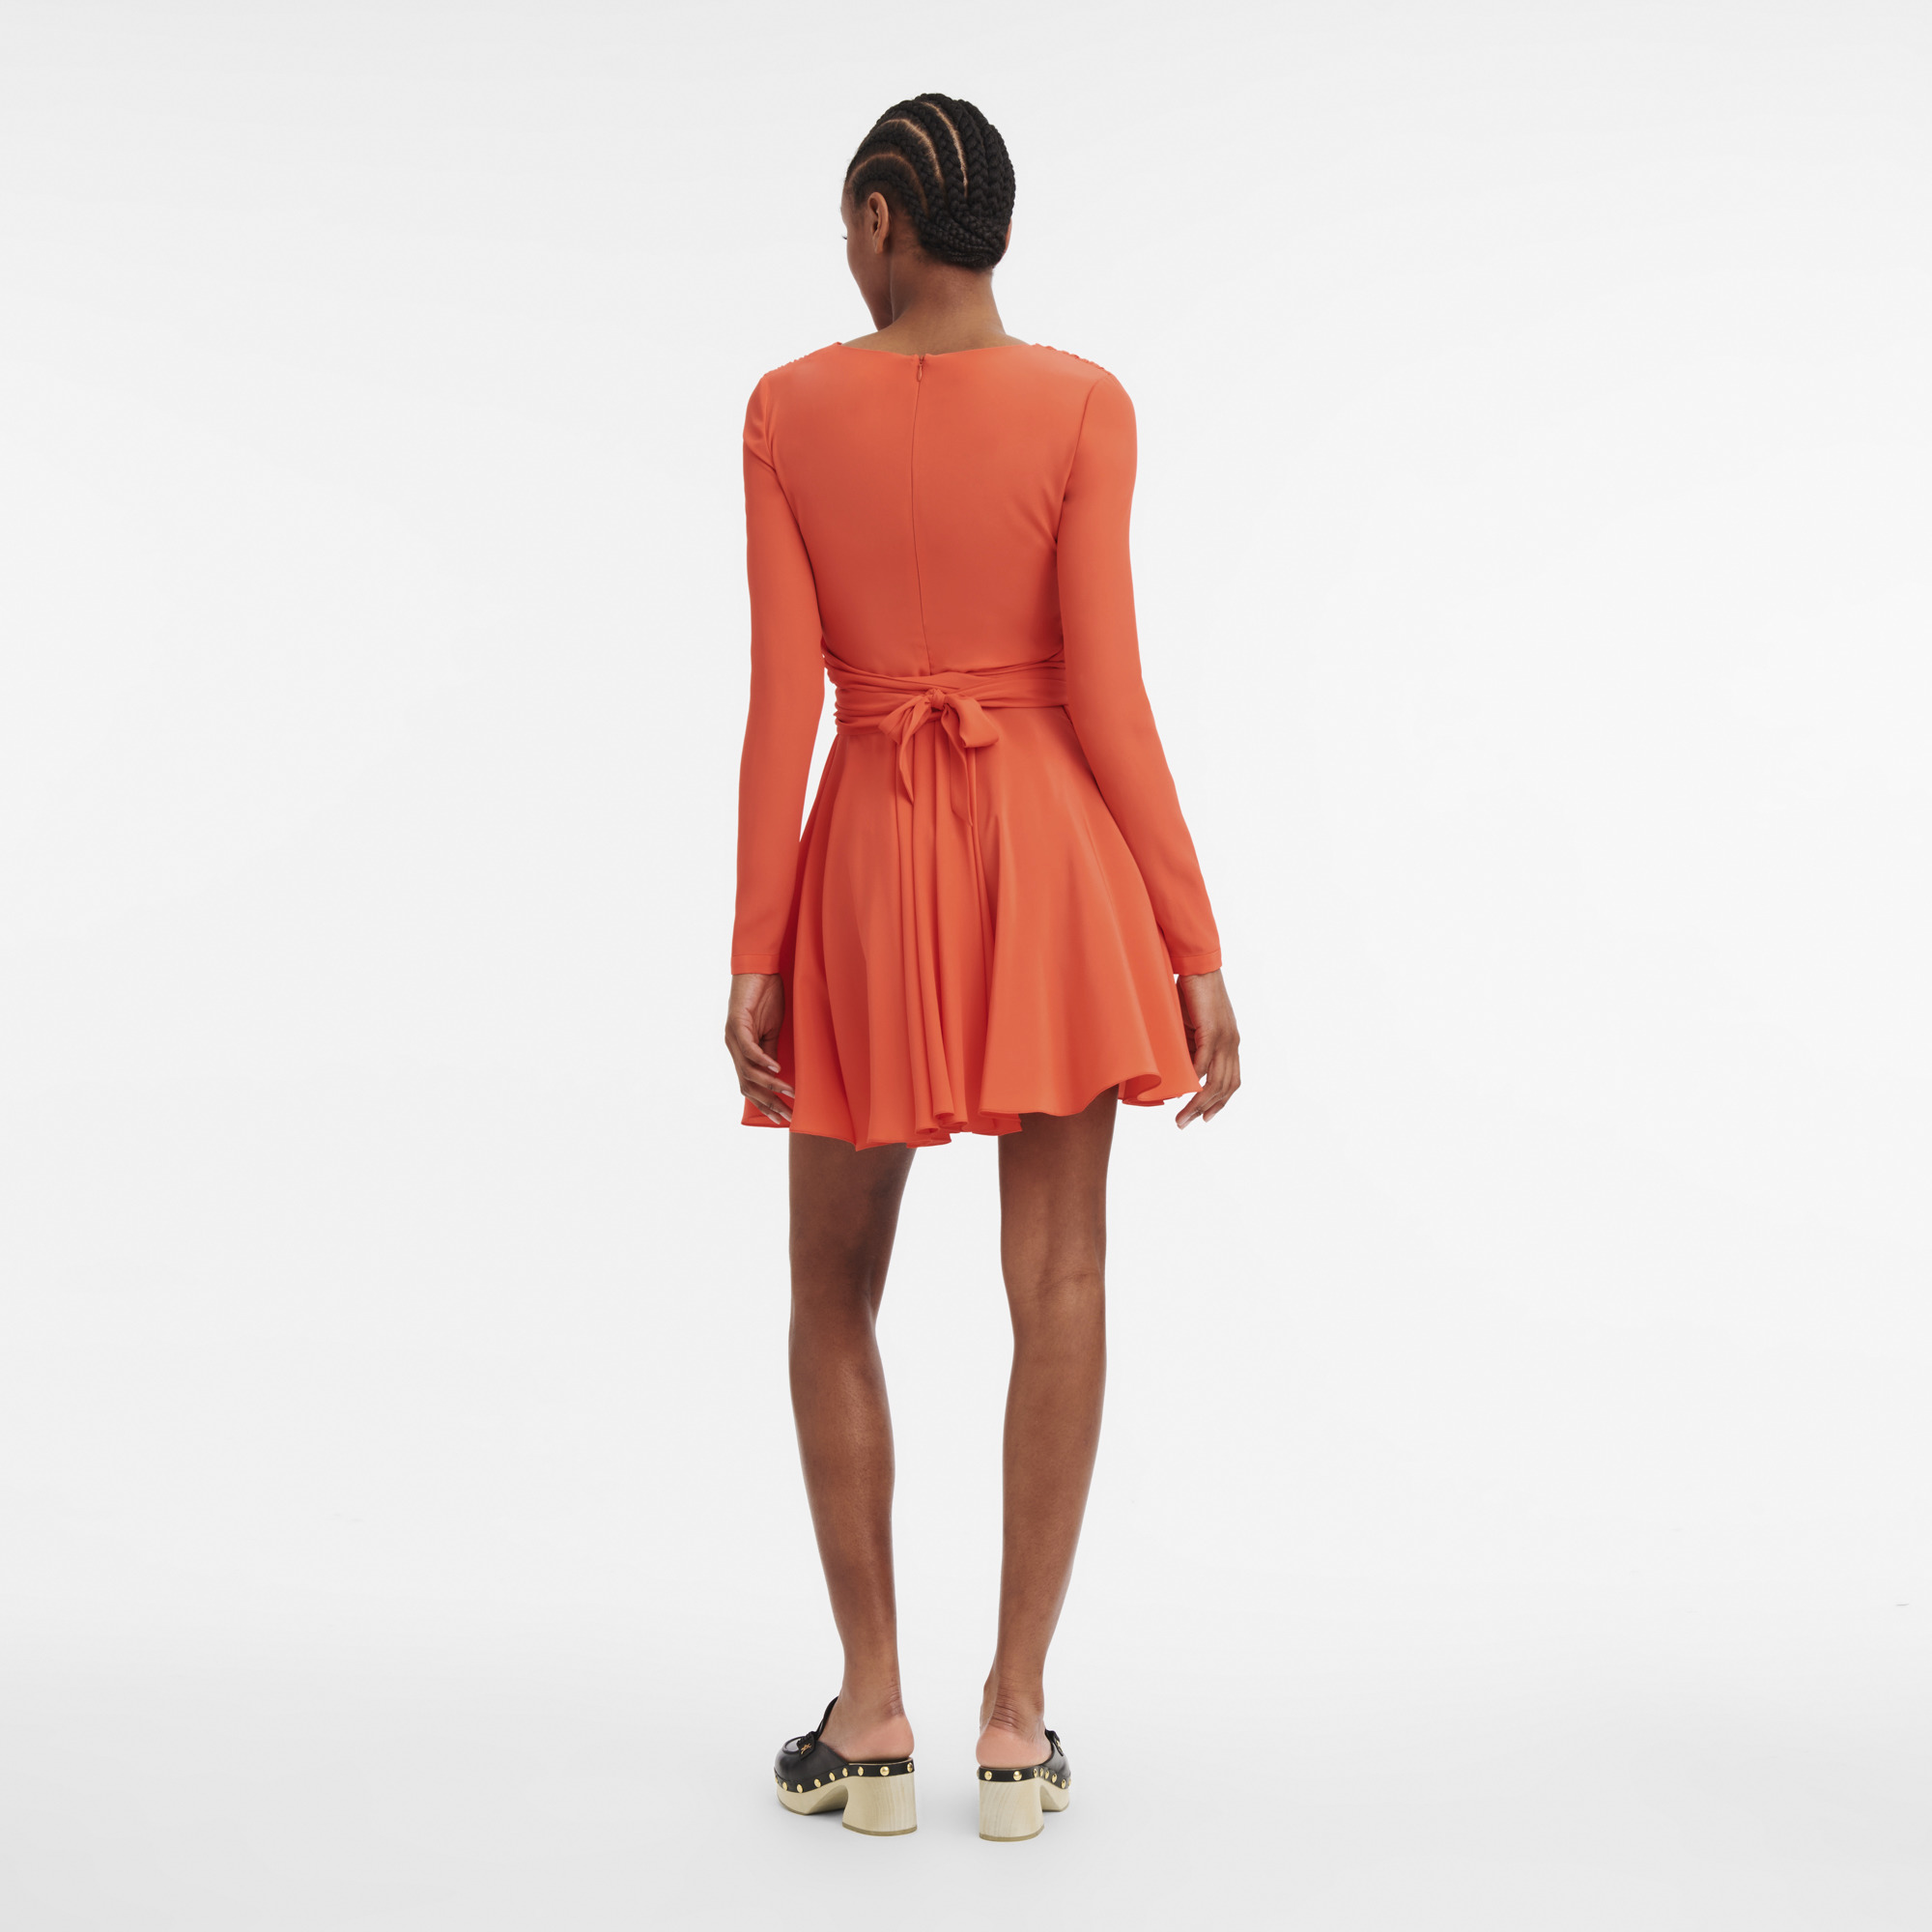 Dress Orange - Crepe - 3